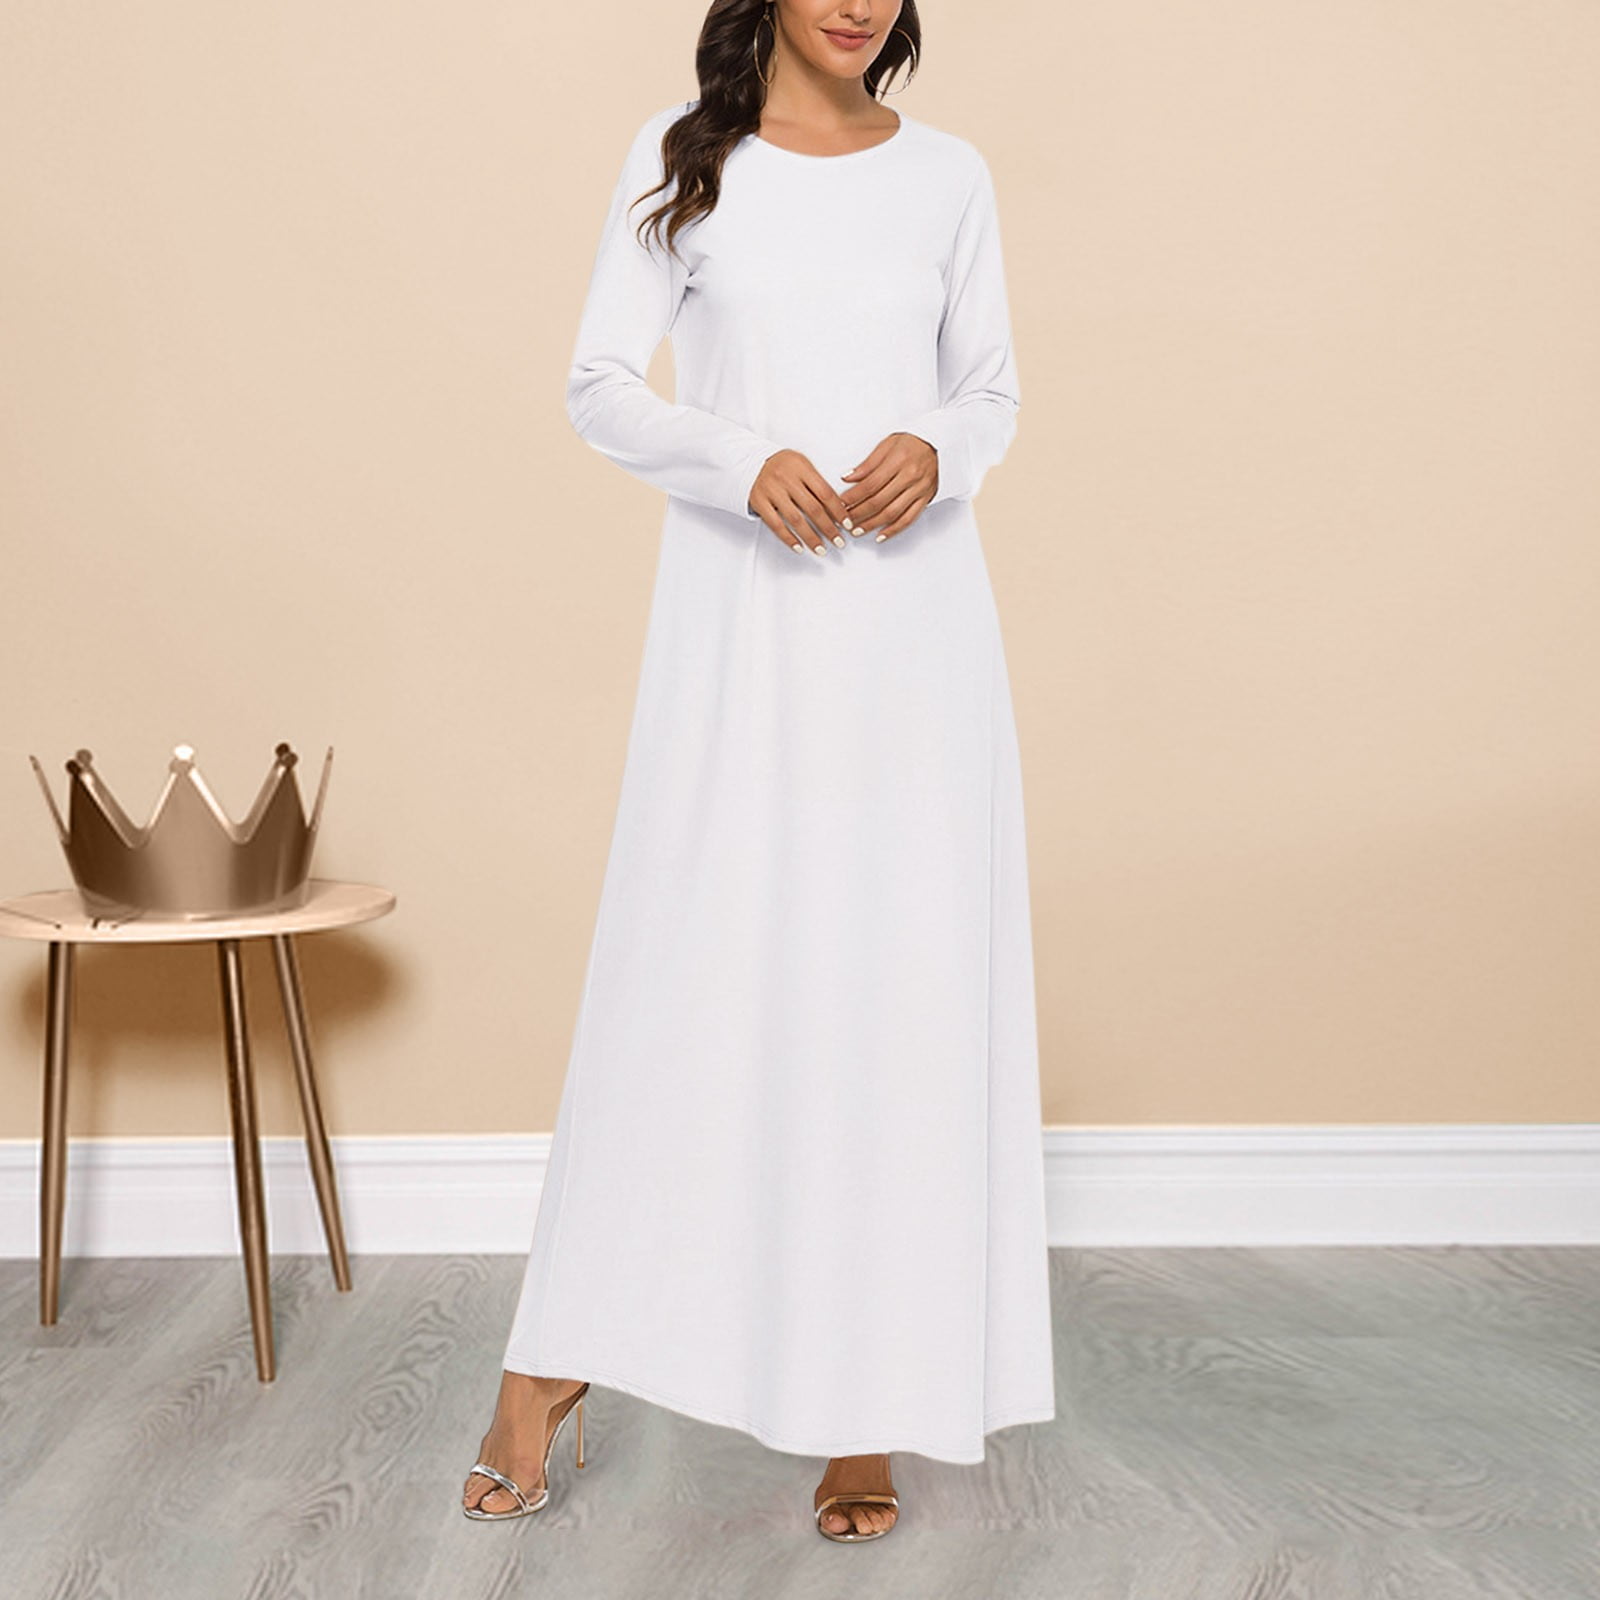 MPWEGNP White Dress Womens Casual Solid Abaya Long Sleeve Under Fall Dresses  for Women Wedding 